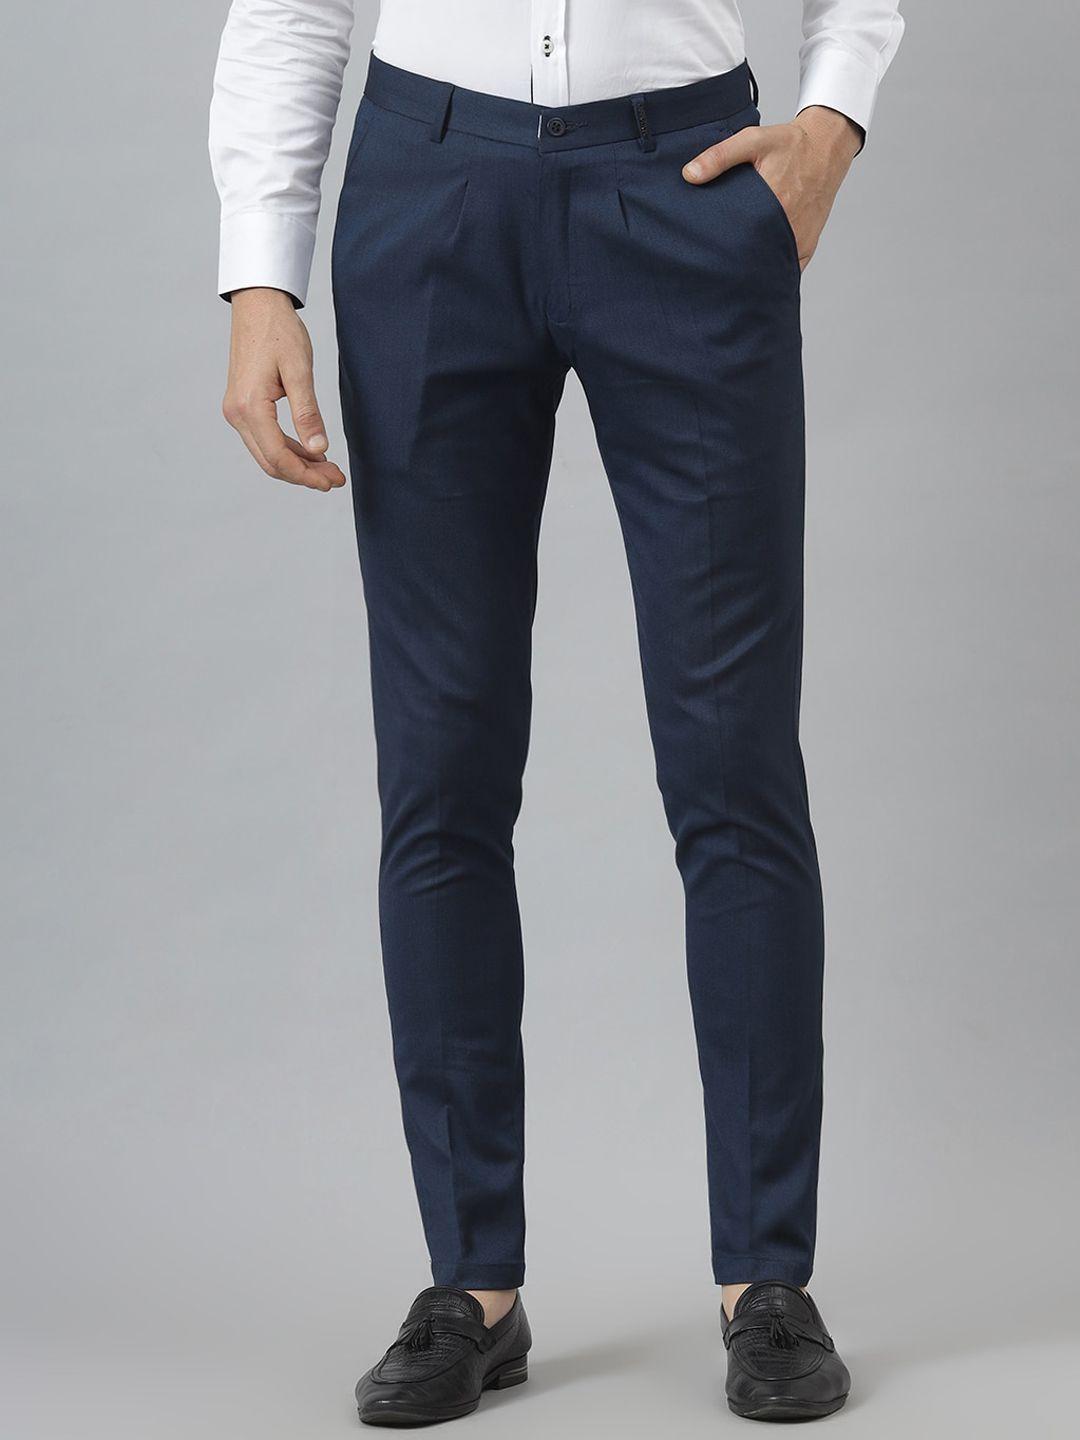 mr-button-men-blue-slim-fit-pleated-trousers